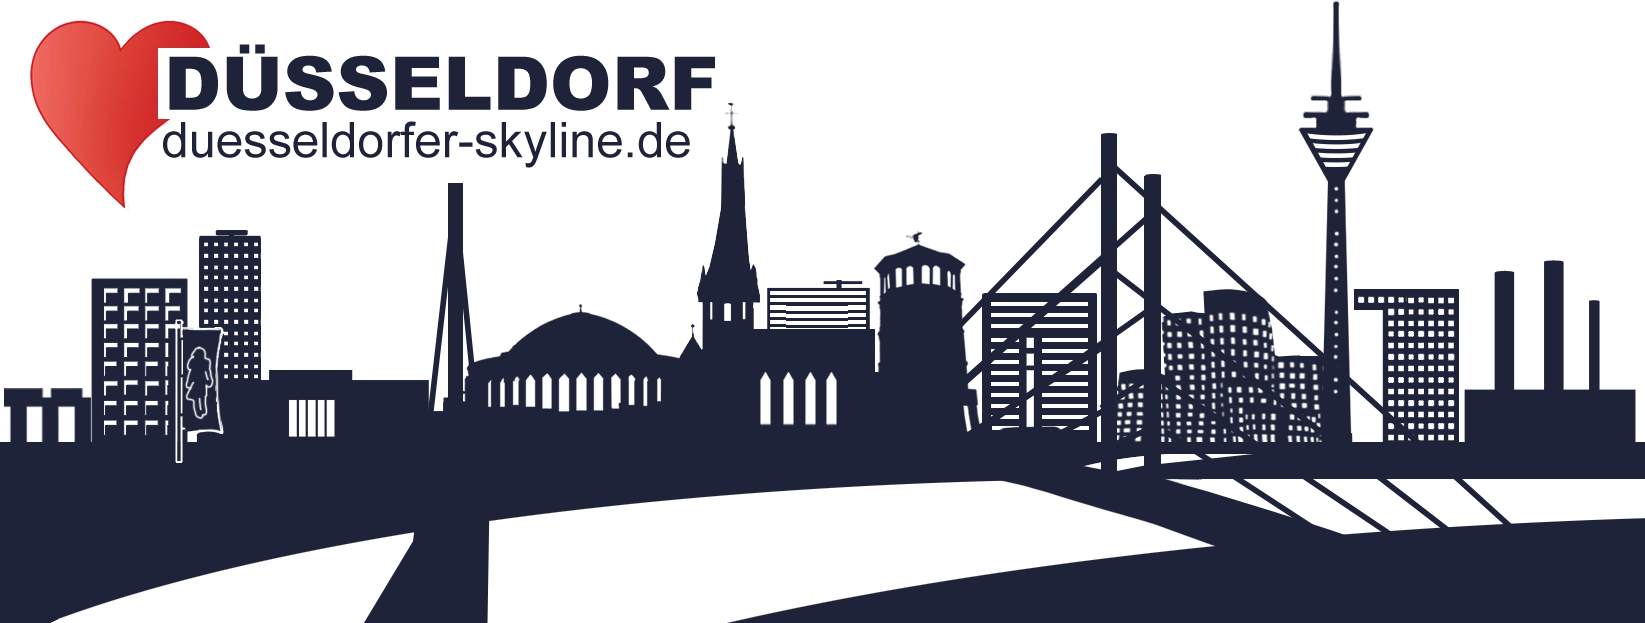 Düsseldorfer Skyline Silhouette